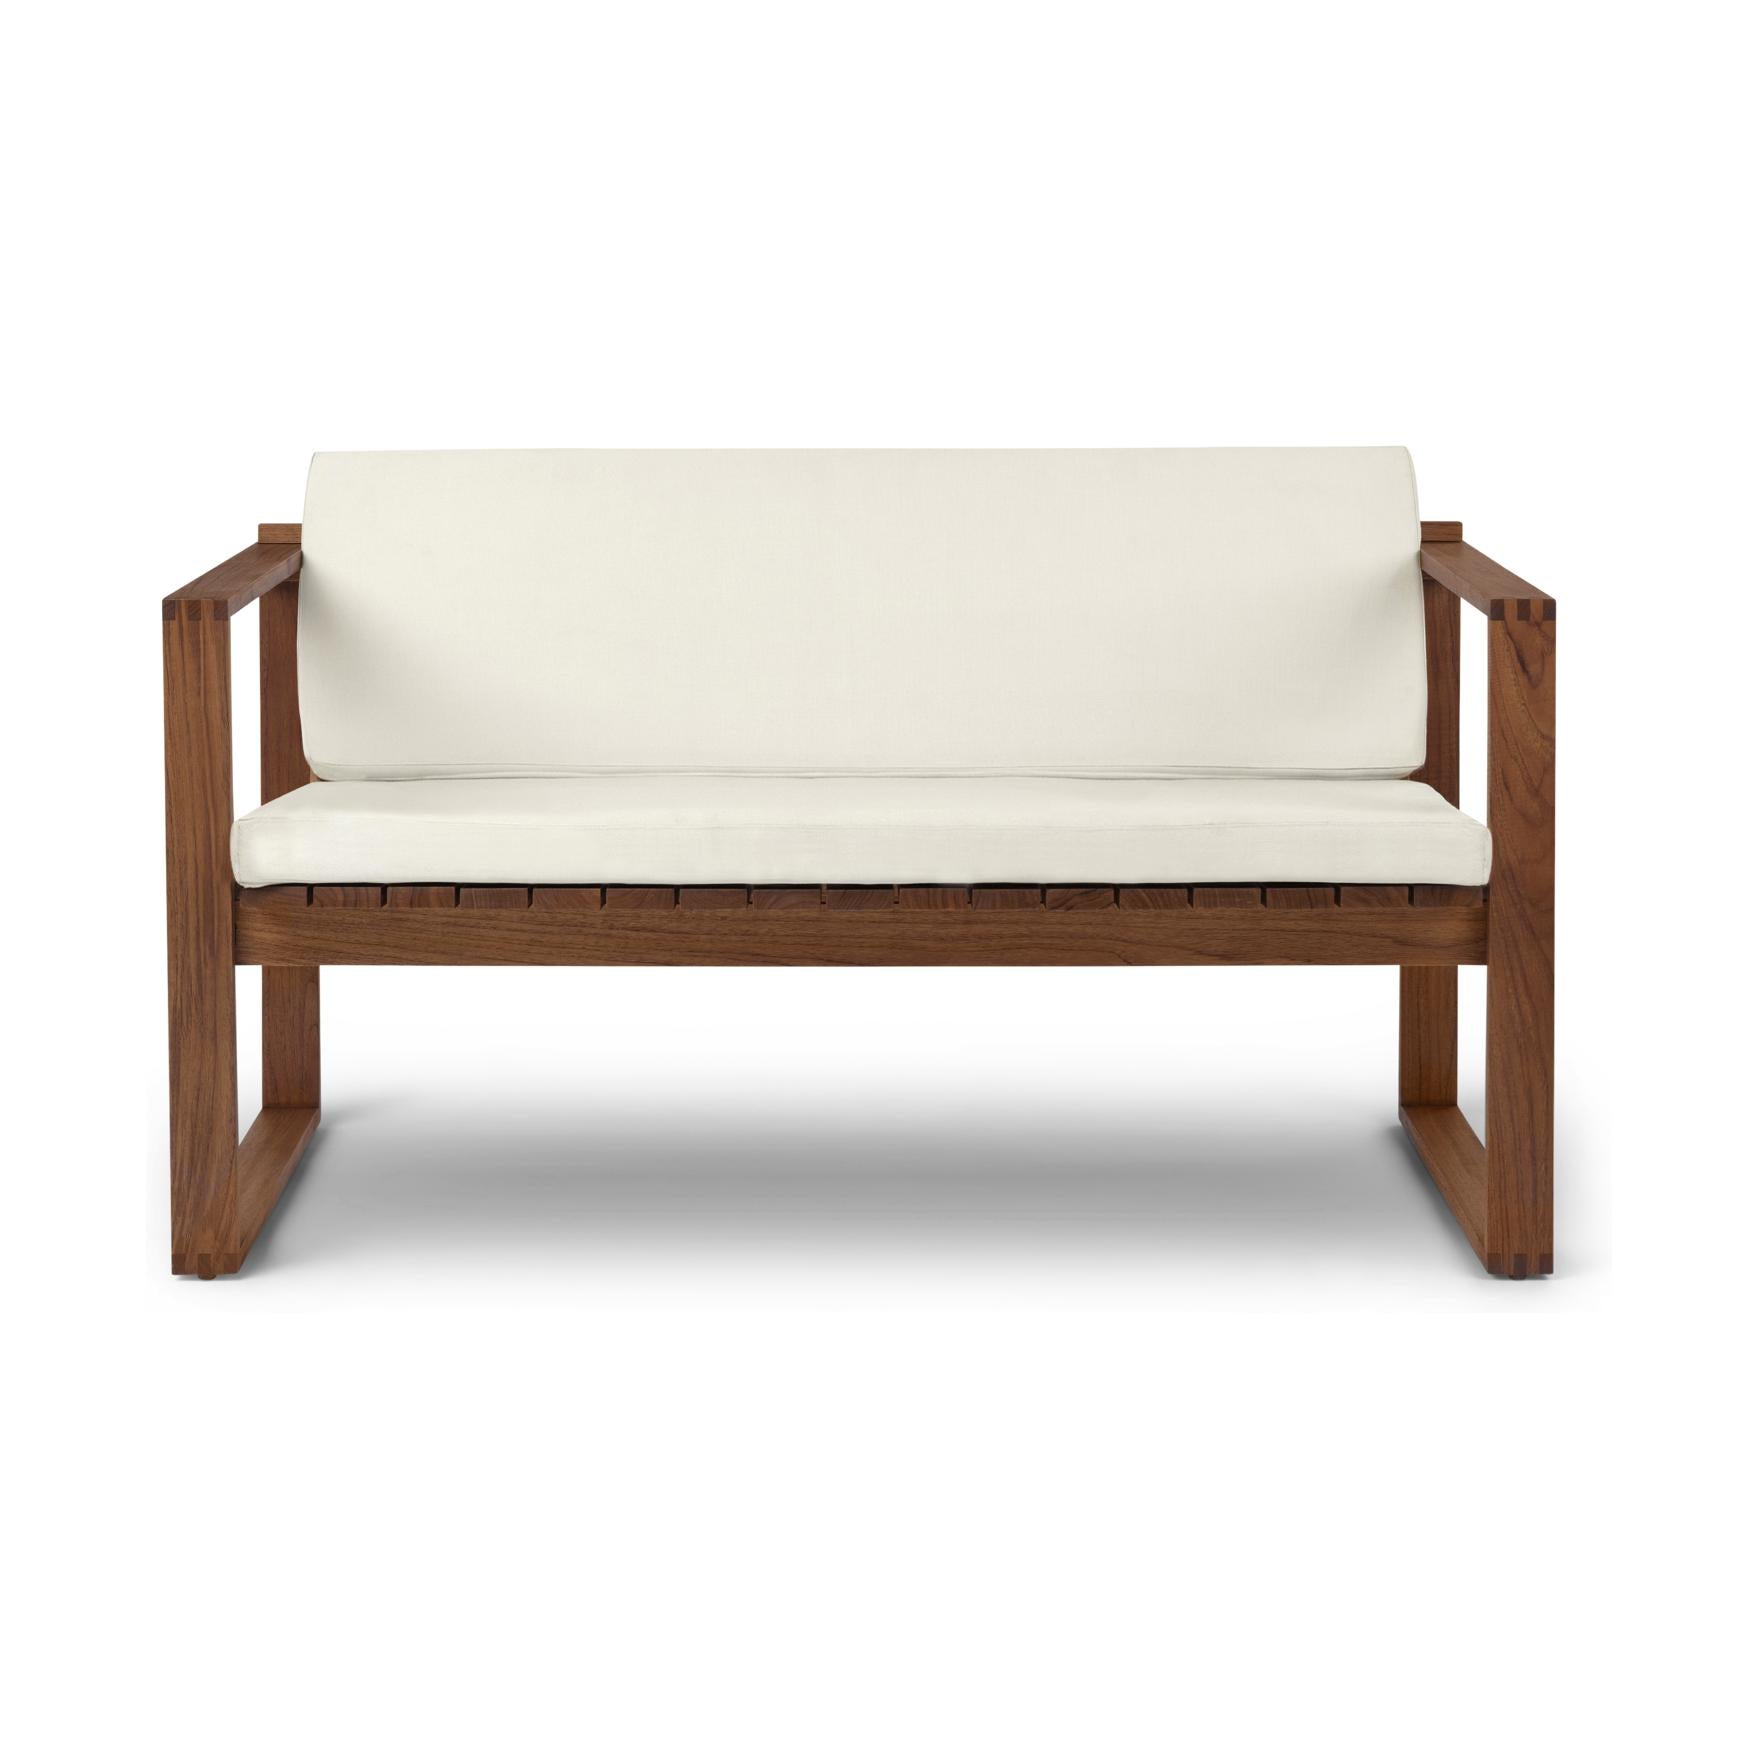 Carl Hansen Seat Cushion For Bk12 Lounge Sofa